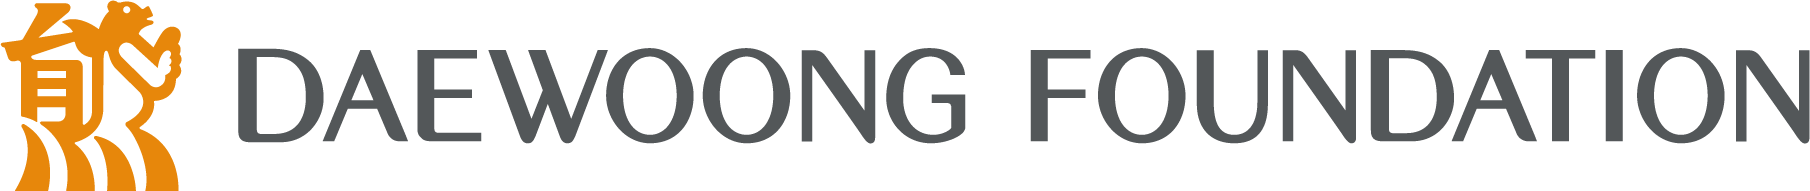 DAEWOONG FOUNDATION logo